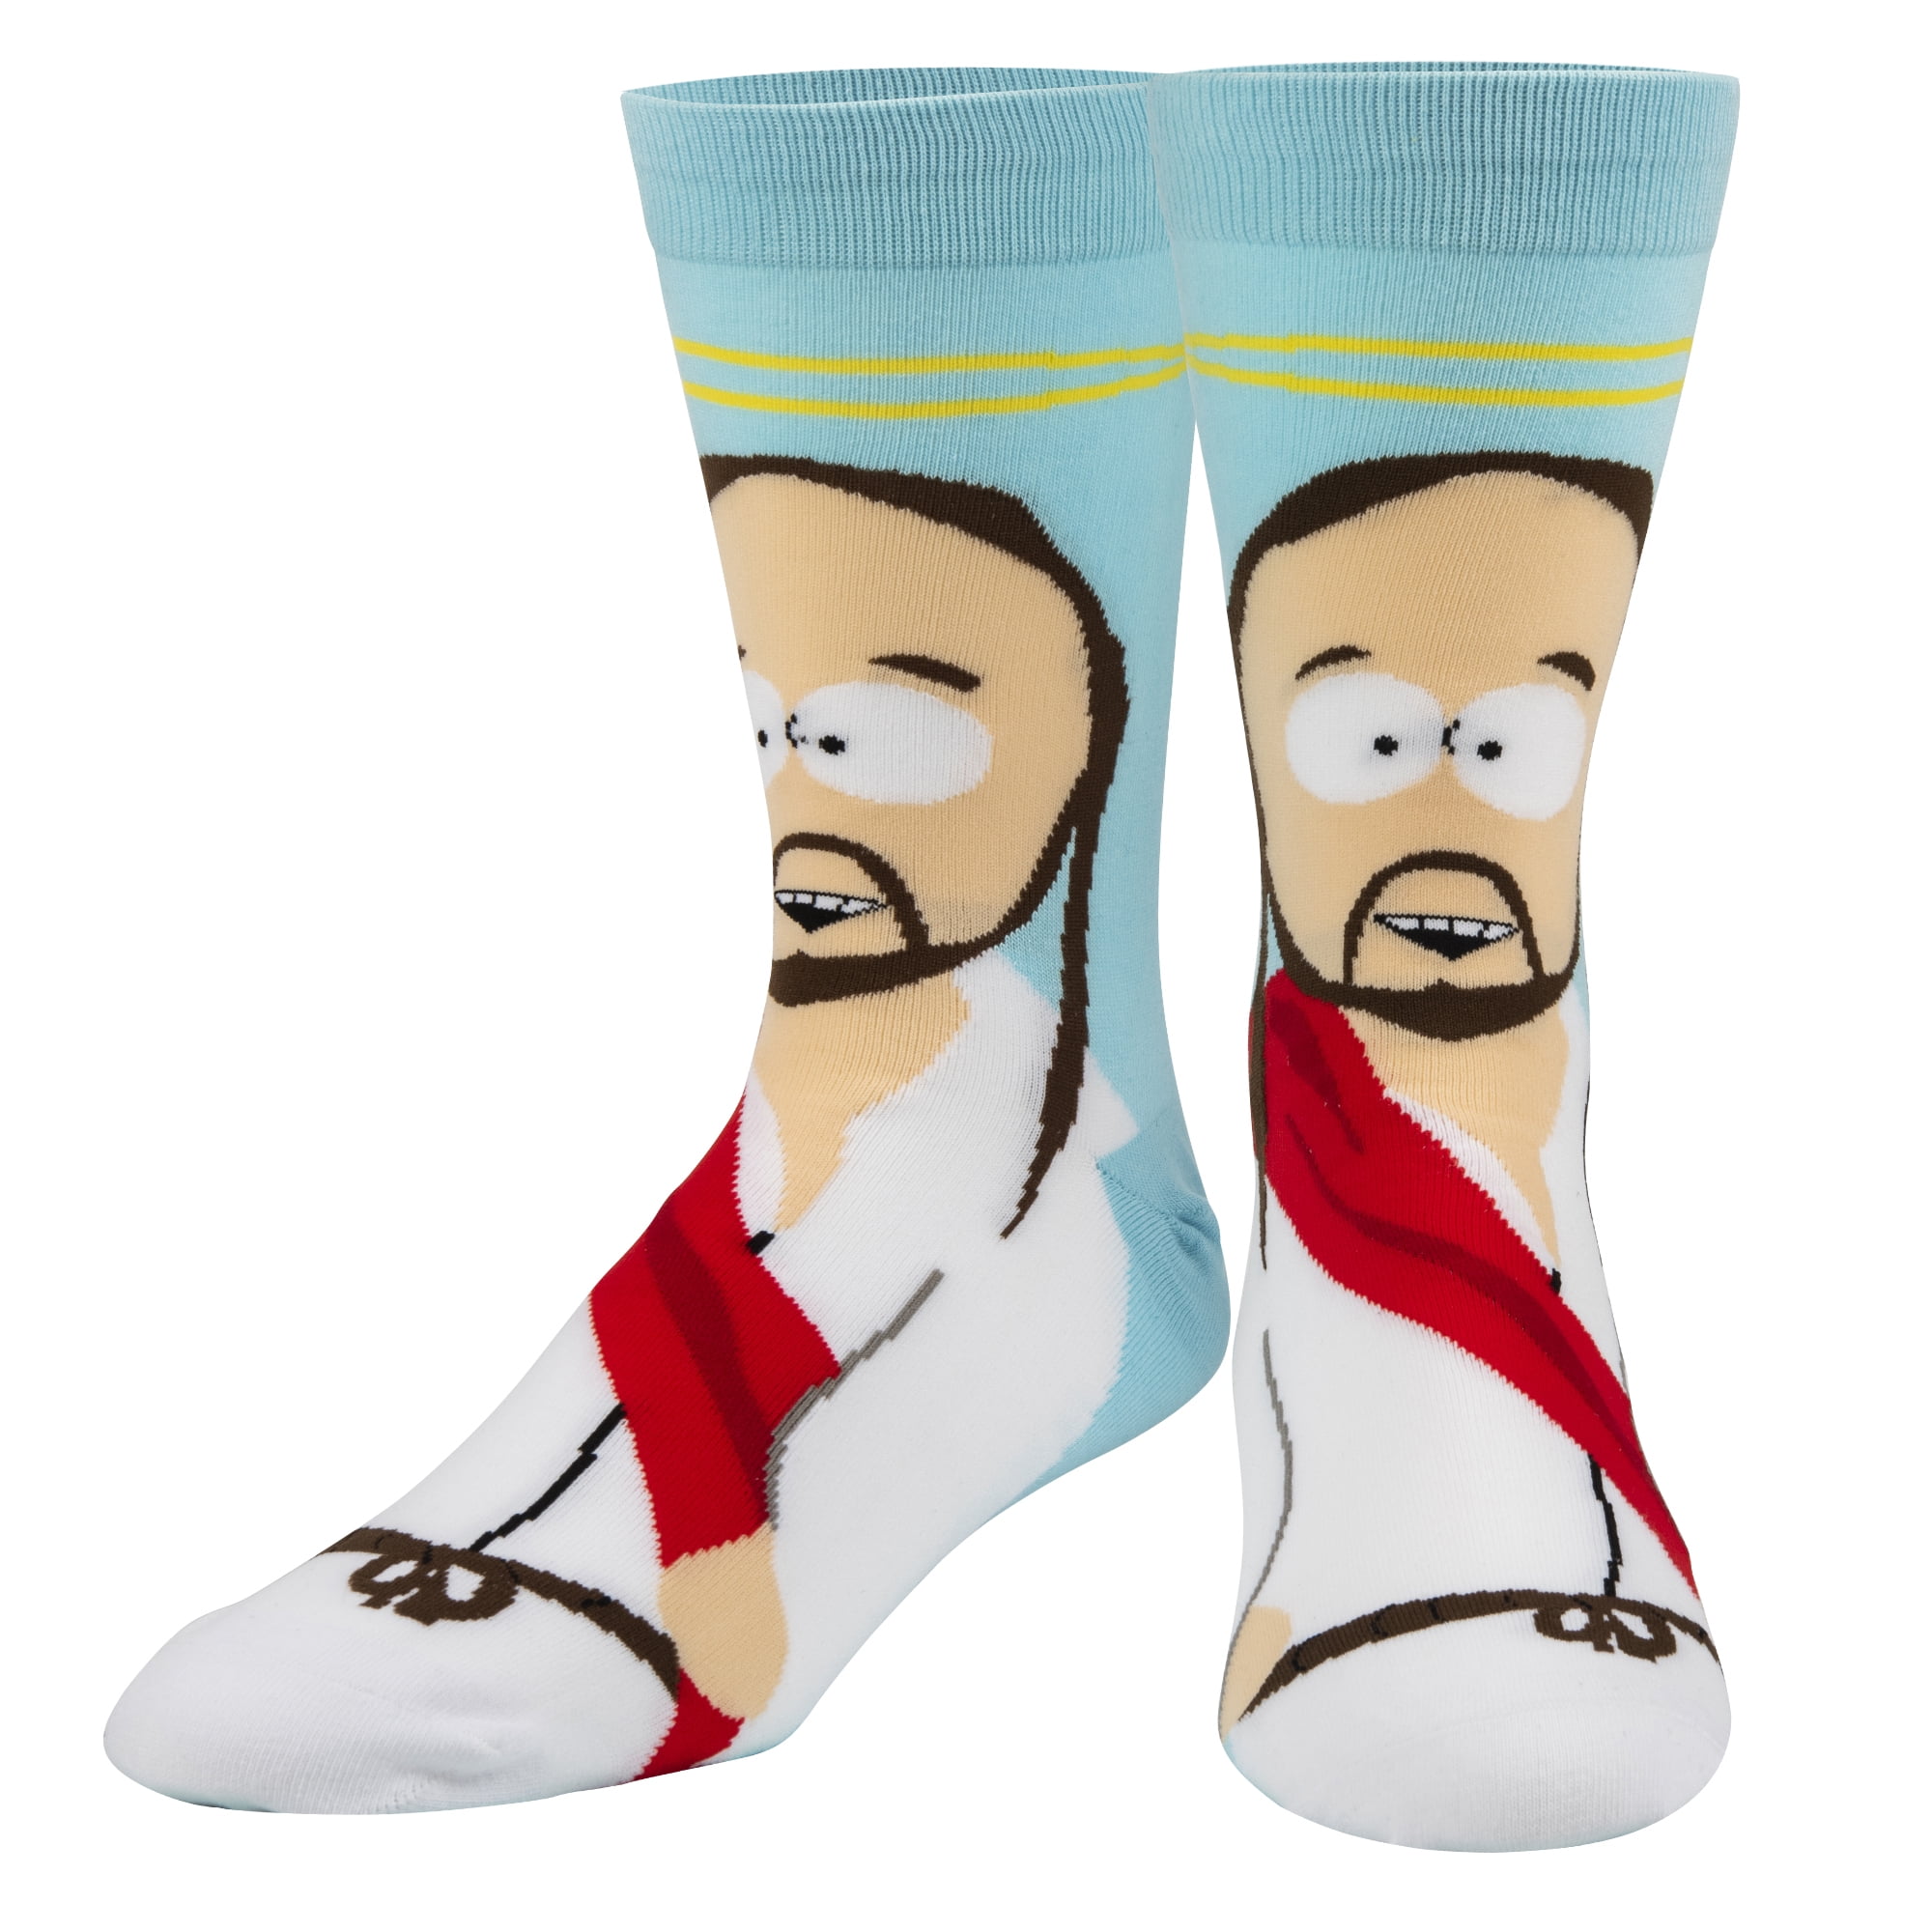 Odd Sox Unisex Socks Multi-Color Patterned Large Size 6-12 Gift Men's & Women's 